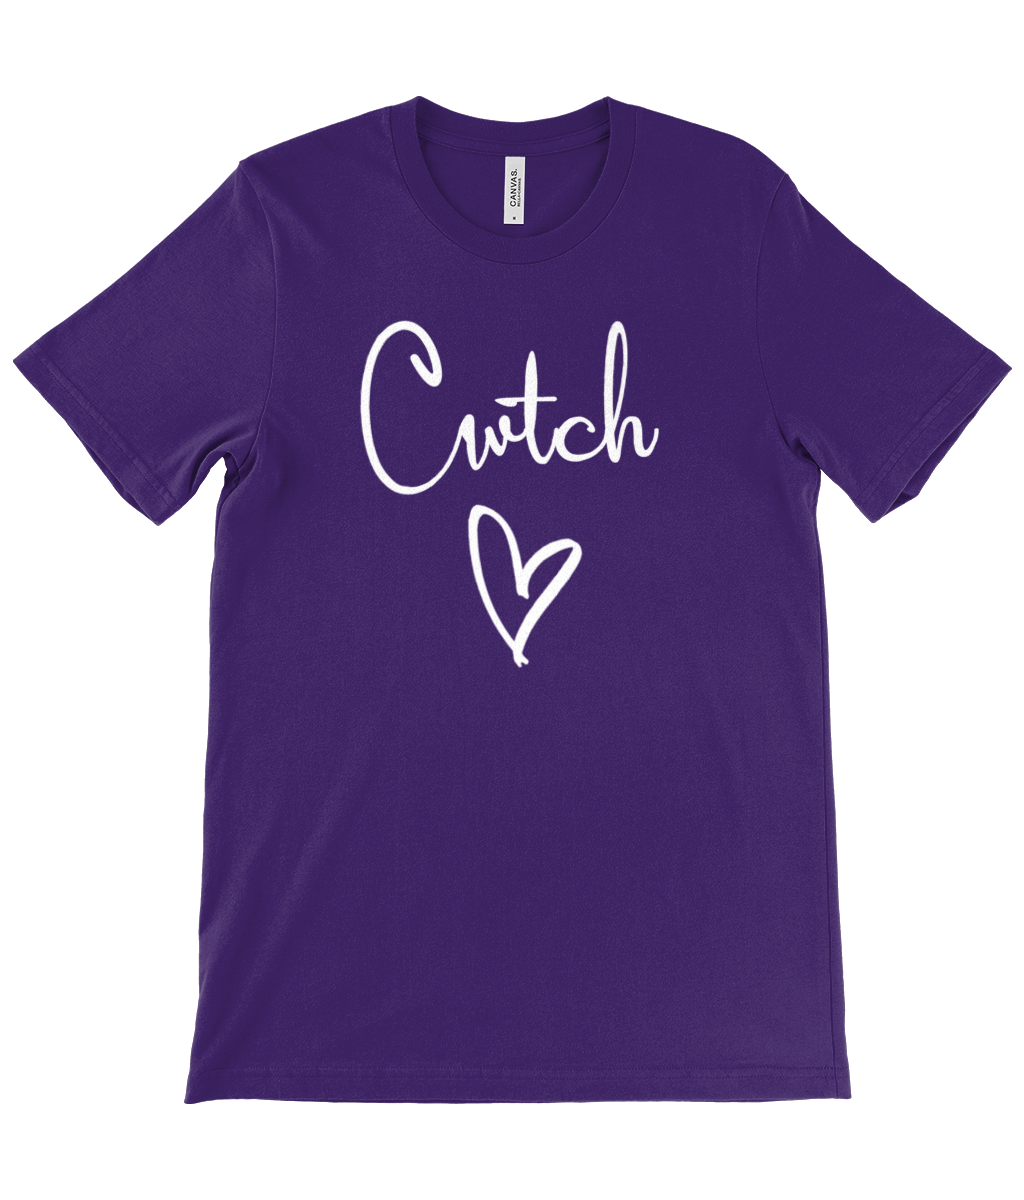 Cwtch Calon T Shirt